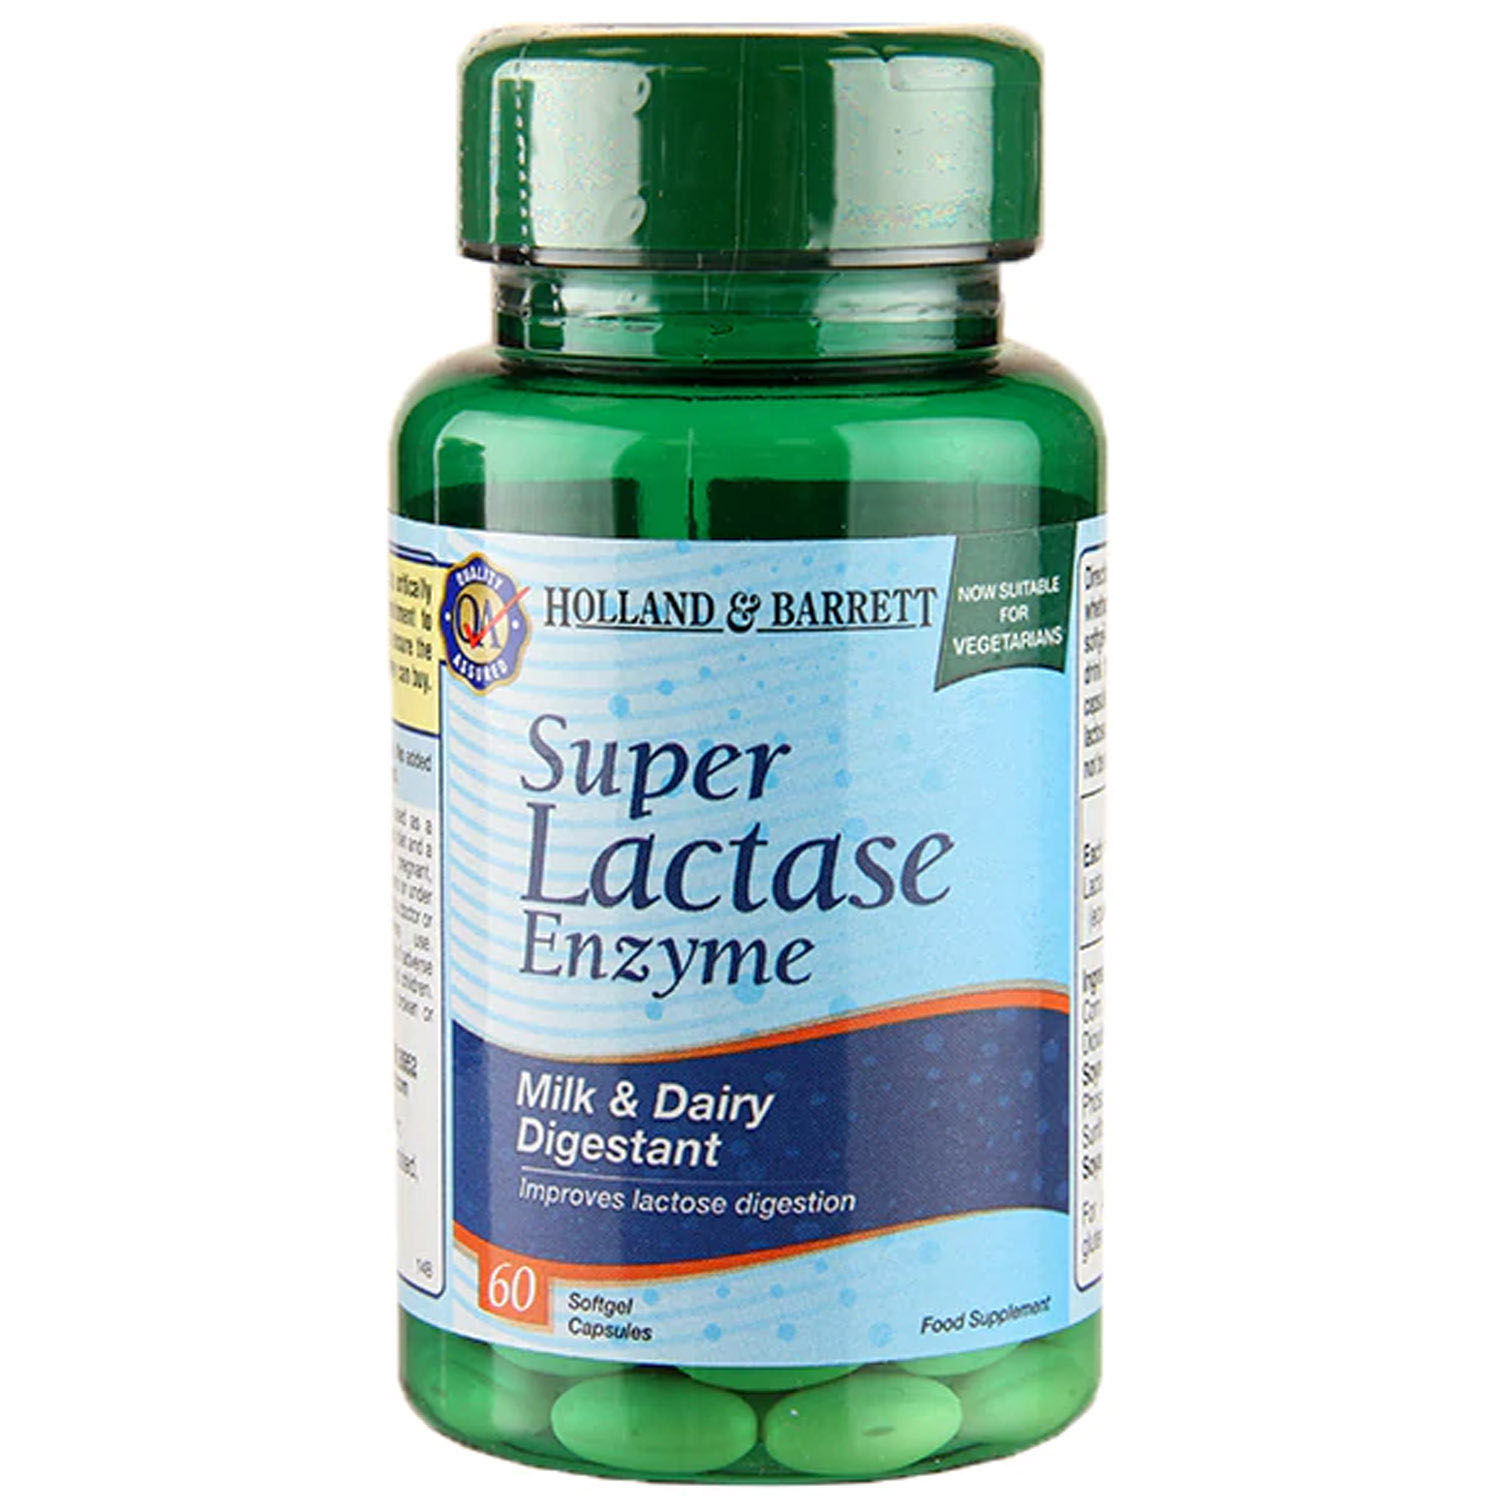 Buy Holland & Barrett Super Lactase Enzyme 125 mg, 60 Tablets Online